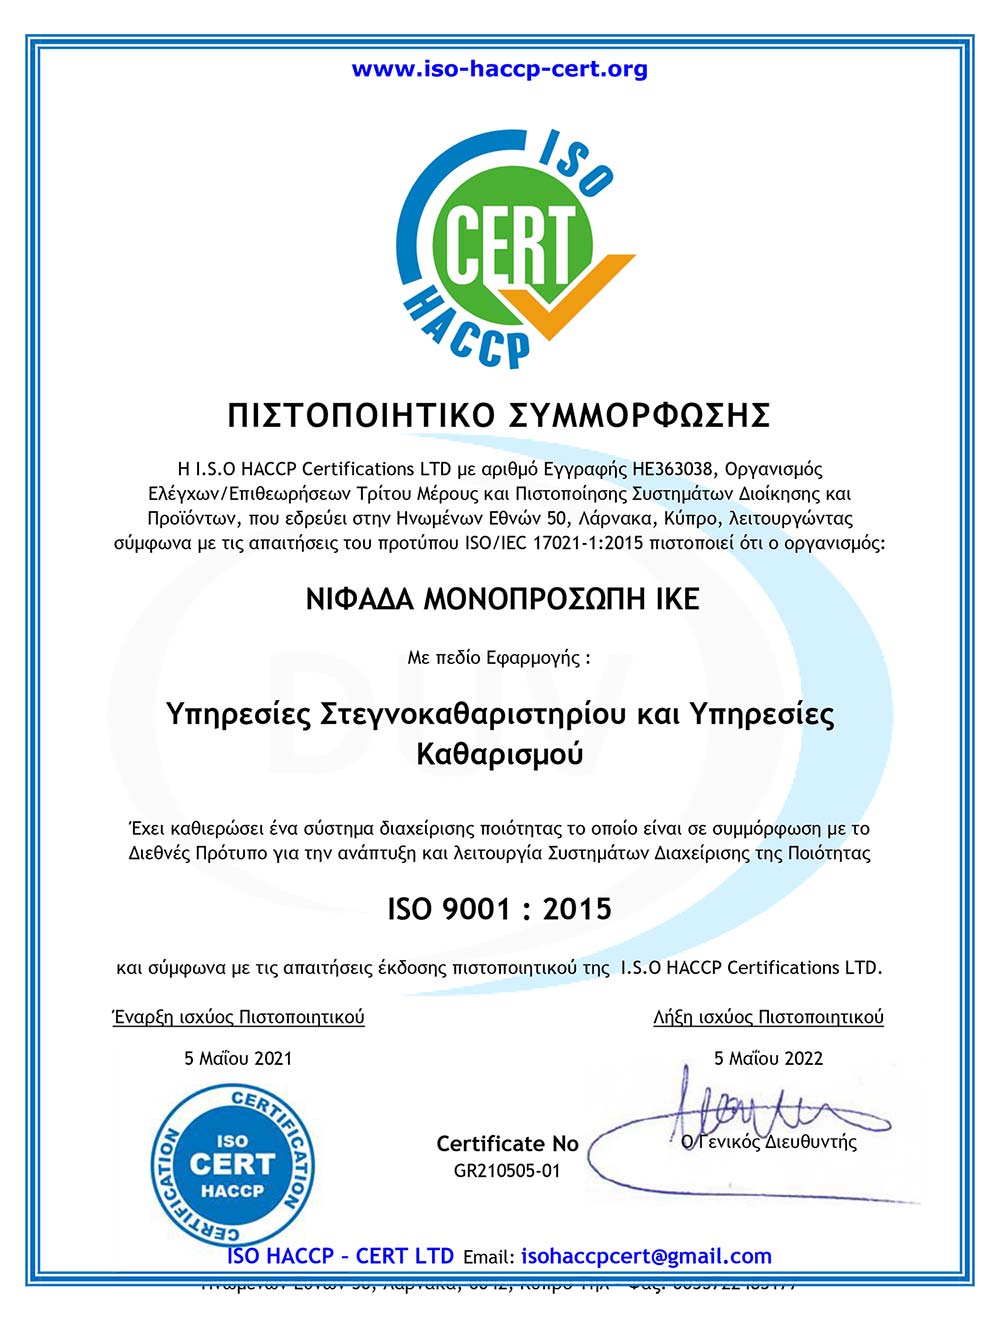 ISO certificate Nifada